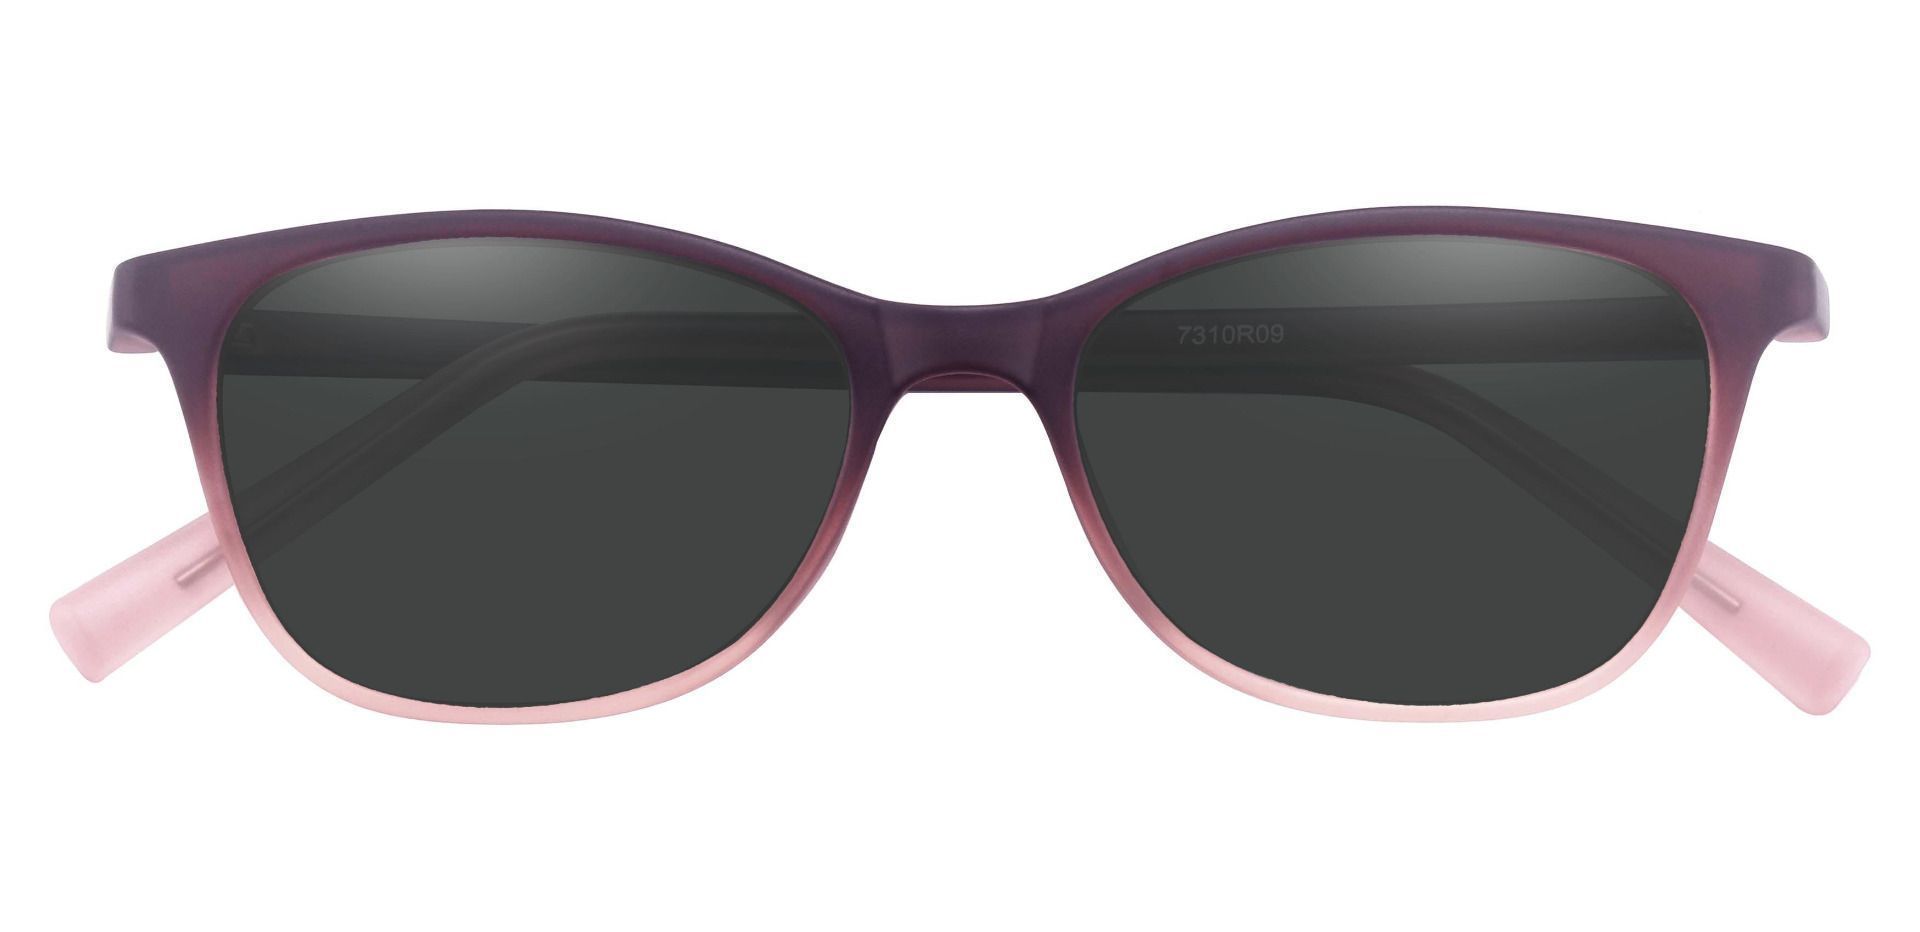 Sasha Classic Square Prescription Sunglasses - Red Frame With Gray Lenses